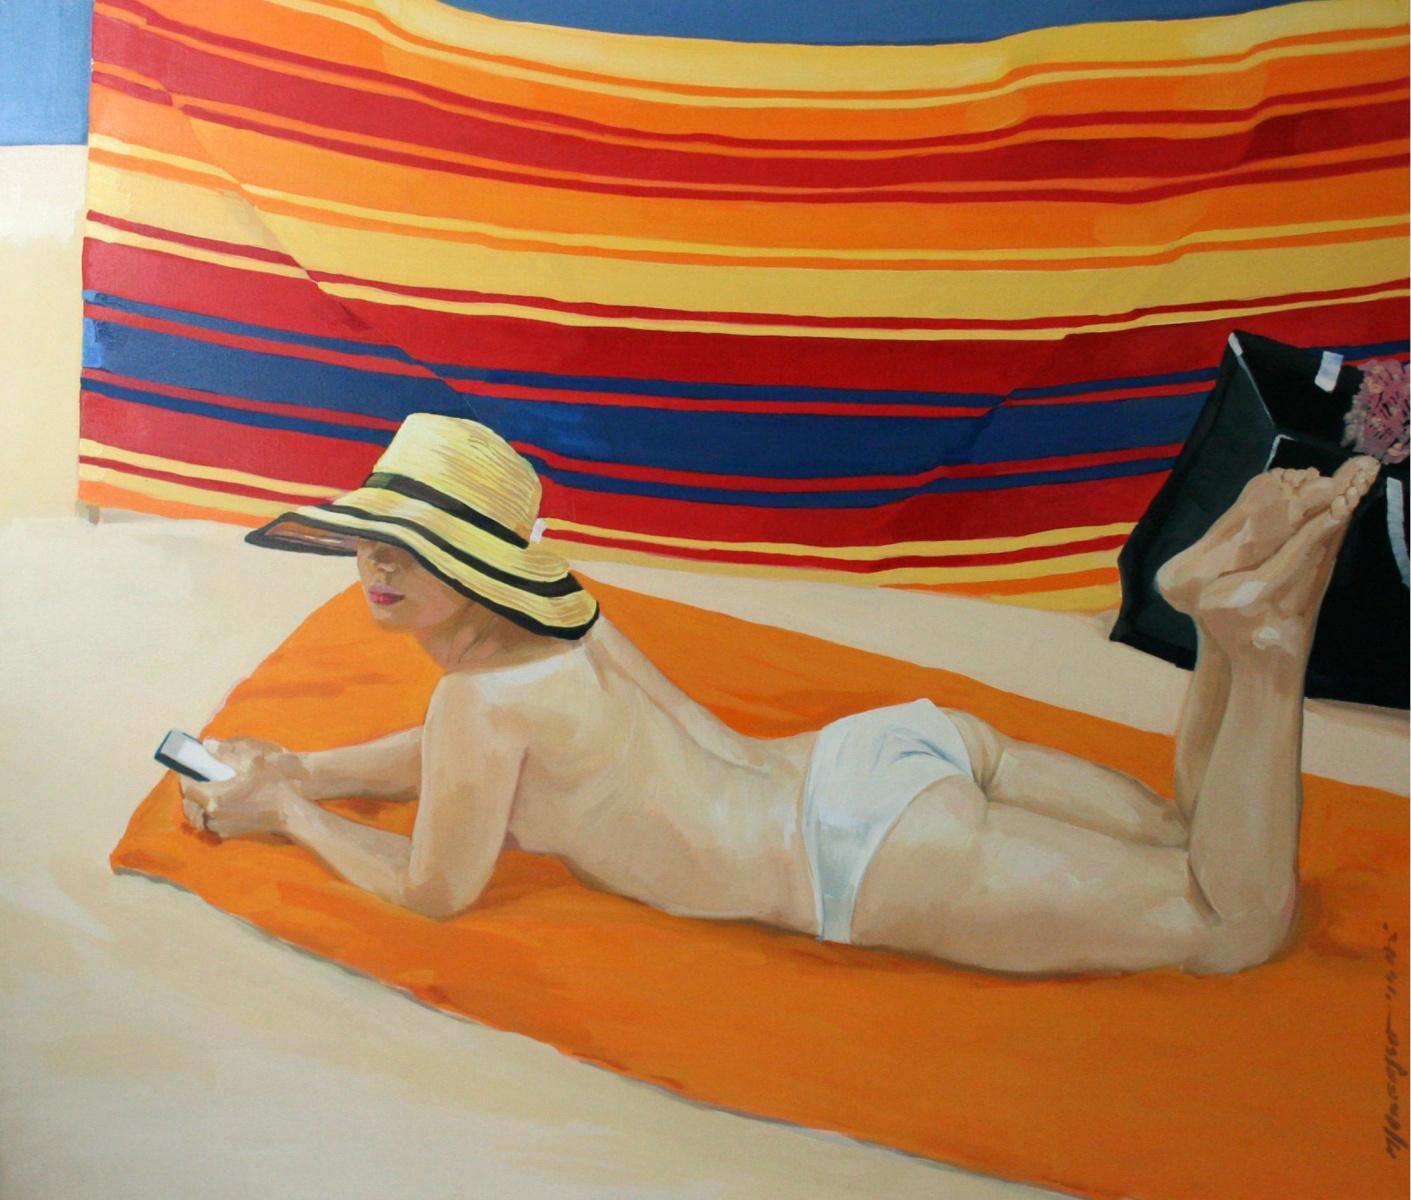 Marek Okrassa Figurative Painting - A Beach Screen - Contemporaty Oil on canvas, Figurative realist painting